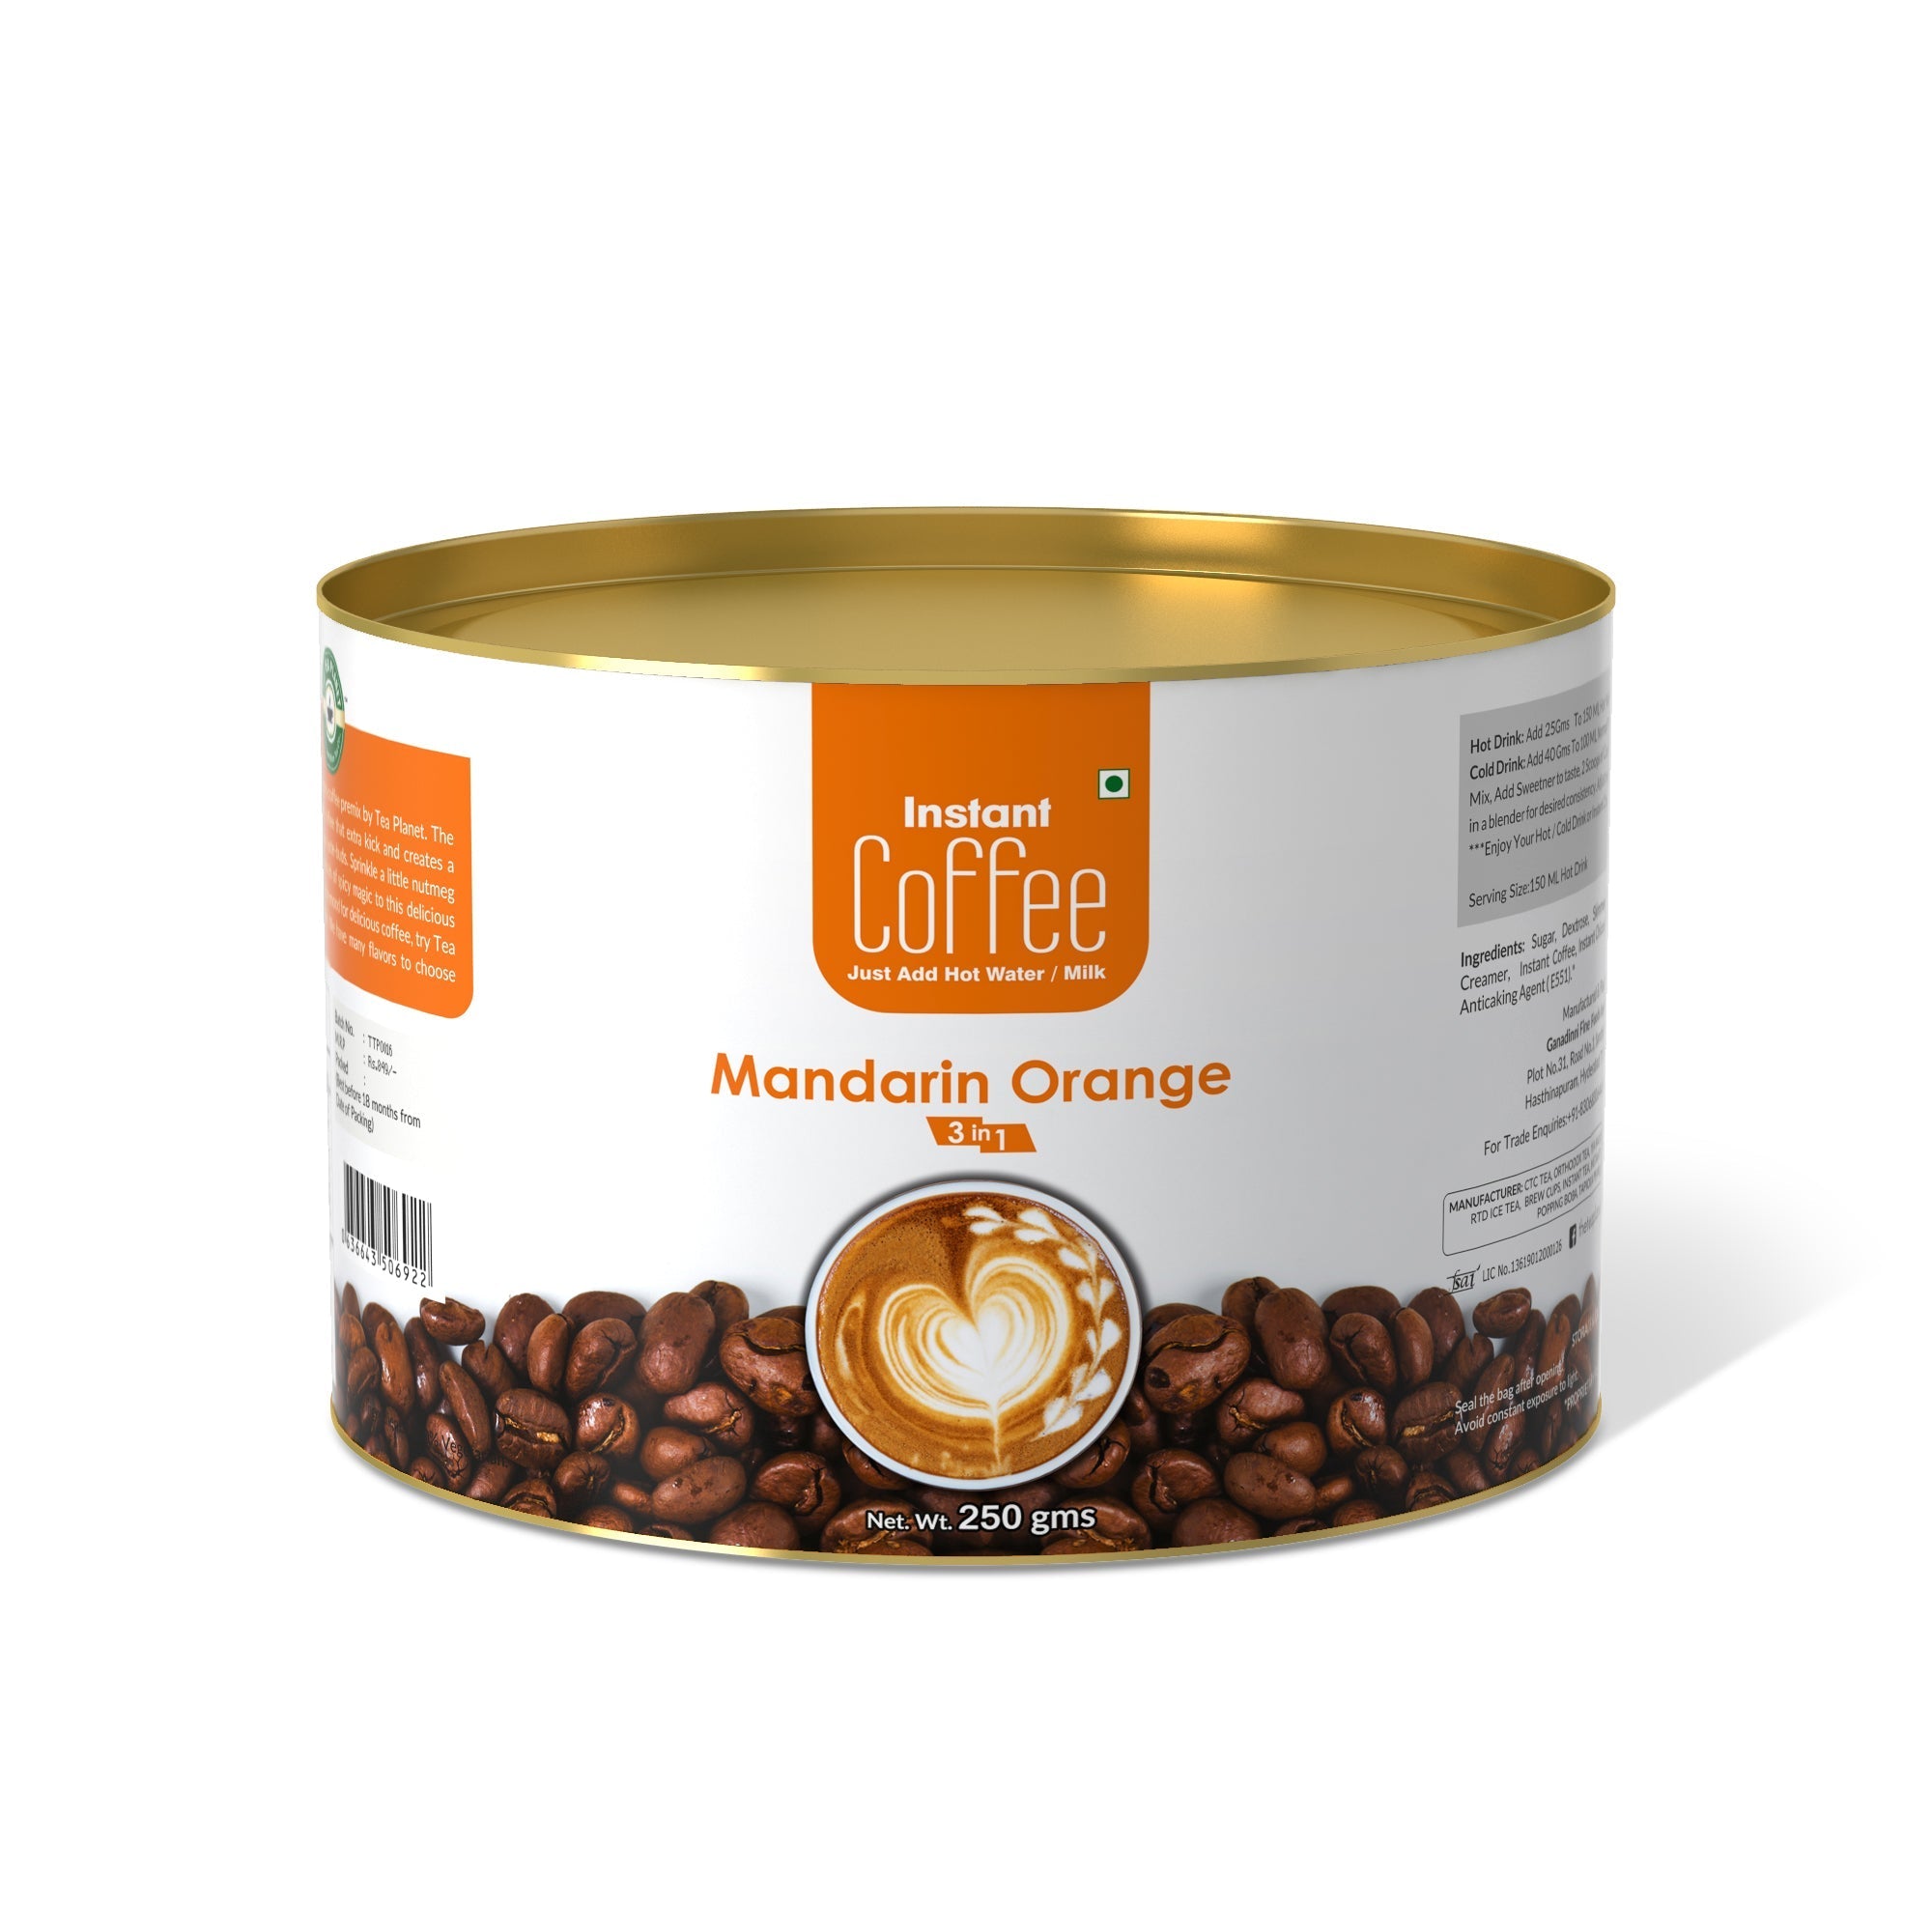 Mandarin Orange Instant Coffee Premix (3 in 1) - 400 gms